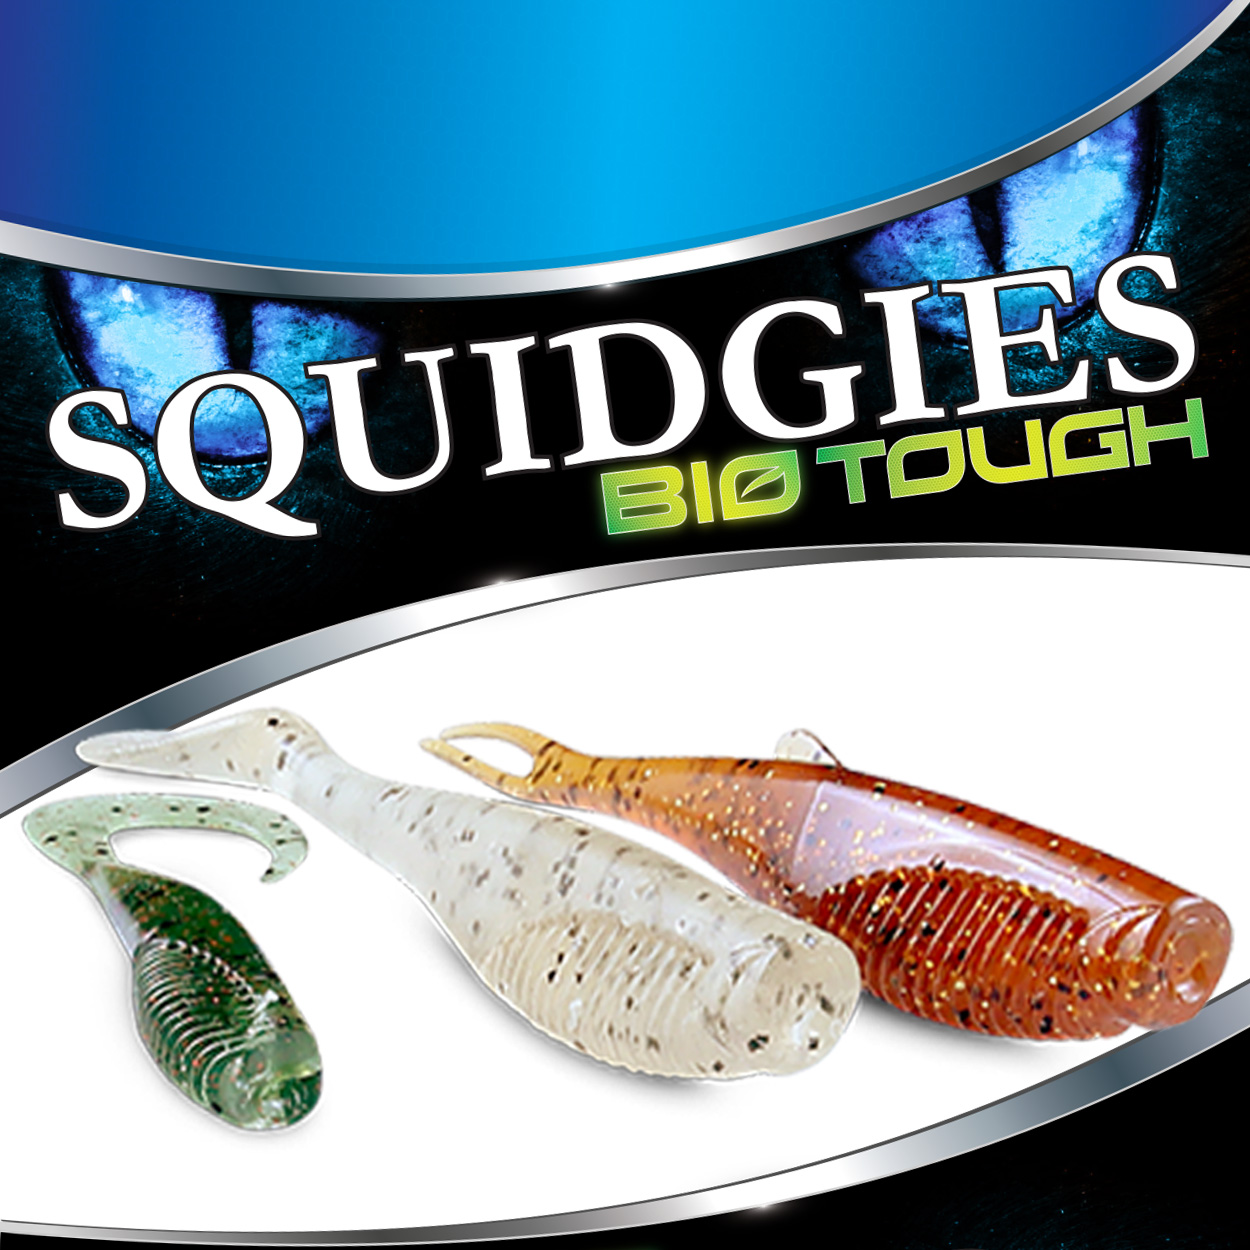 The Squidgies Bio Tough Story